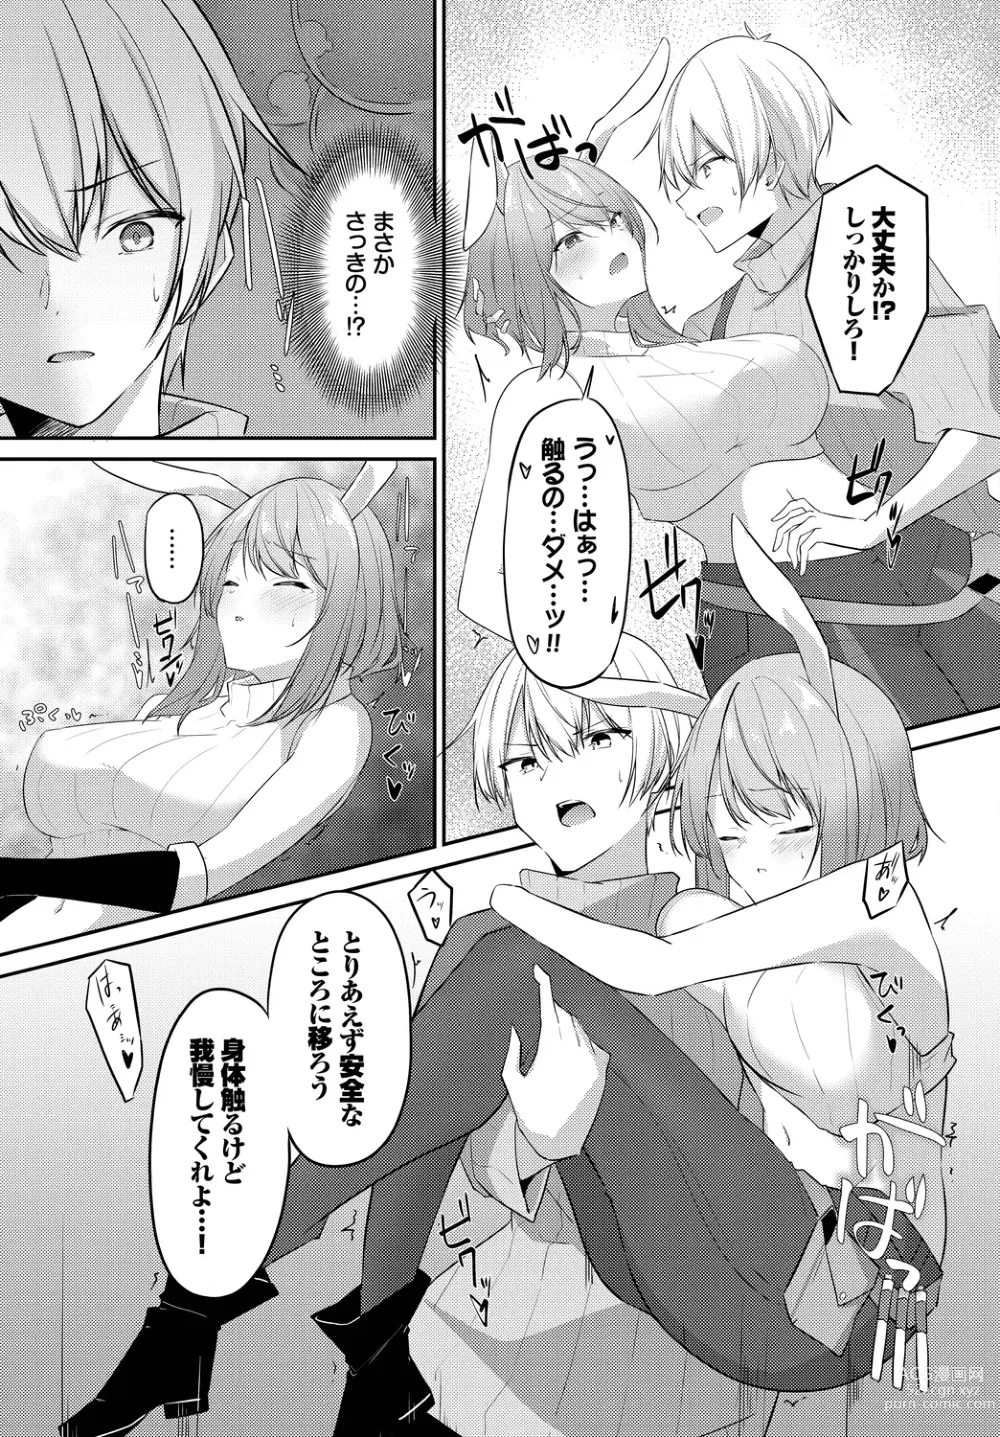 Page 147 of manga Meikyuu Lilac - Laberynth Lilac.